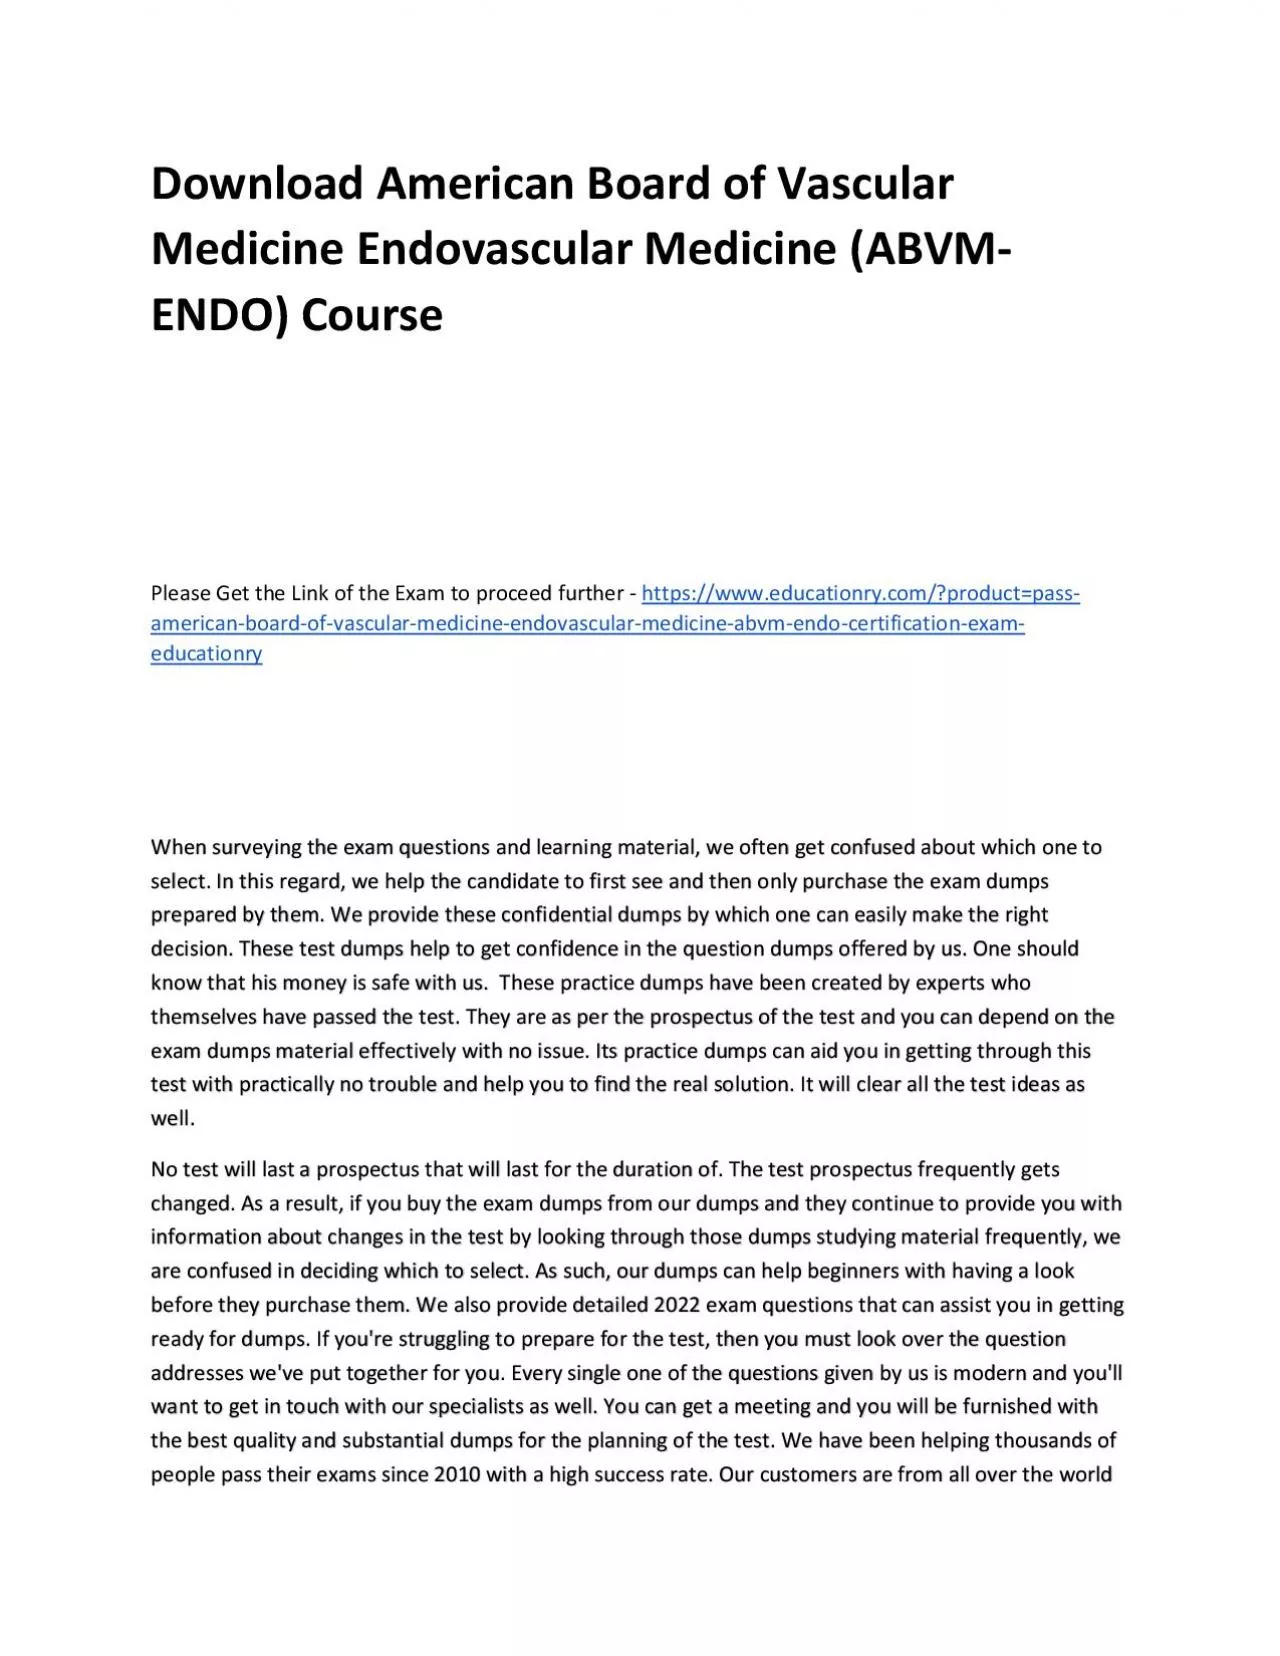 Download American Board of Vascular Medicine Endovascular Medicine (ABVM-ENDO) Practice